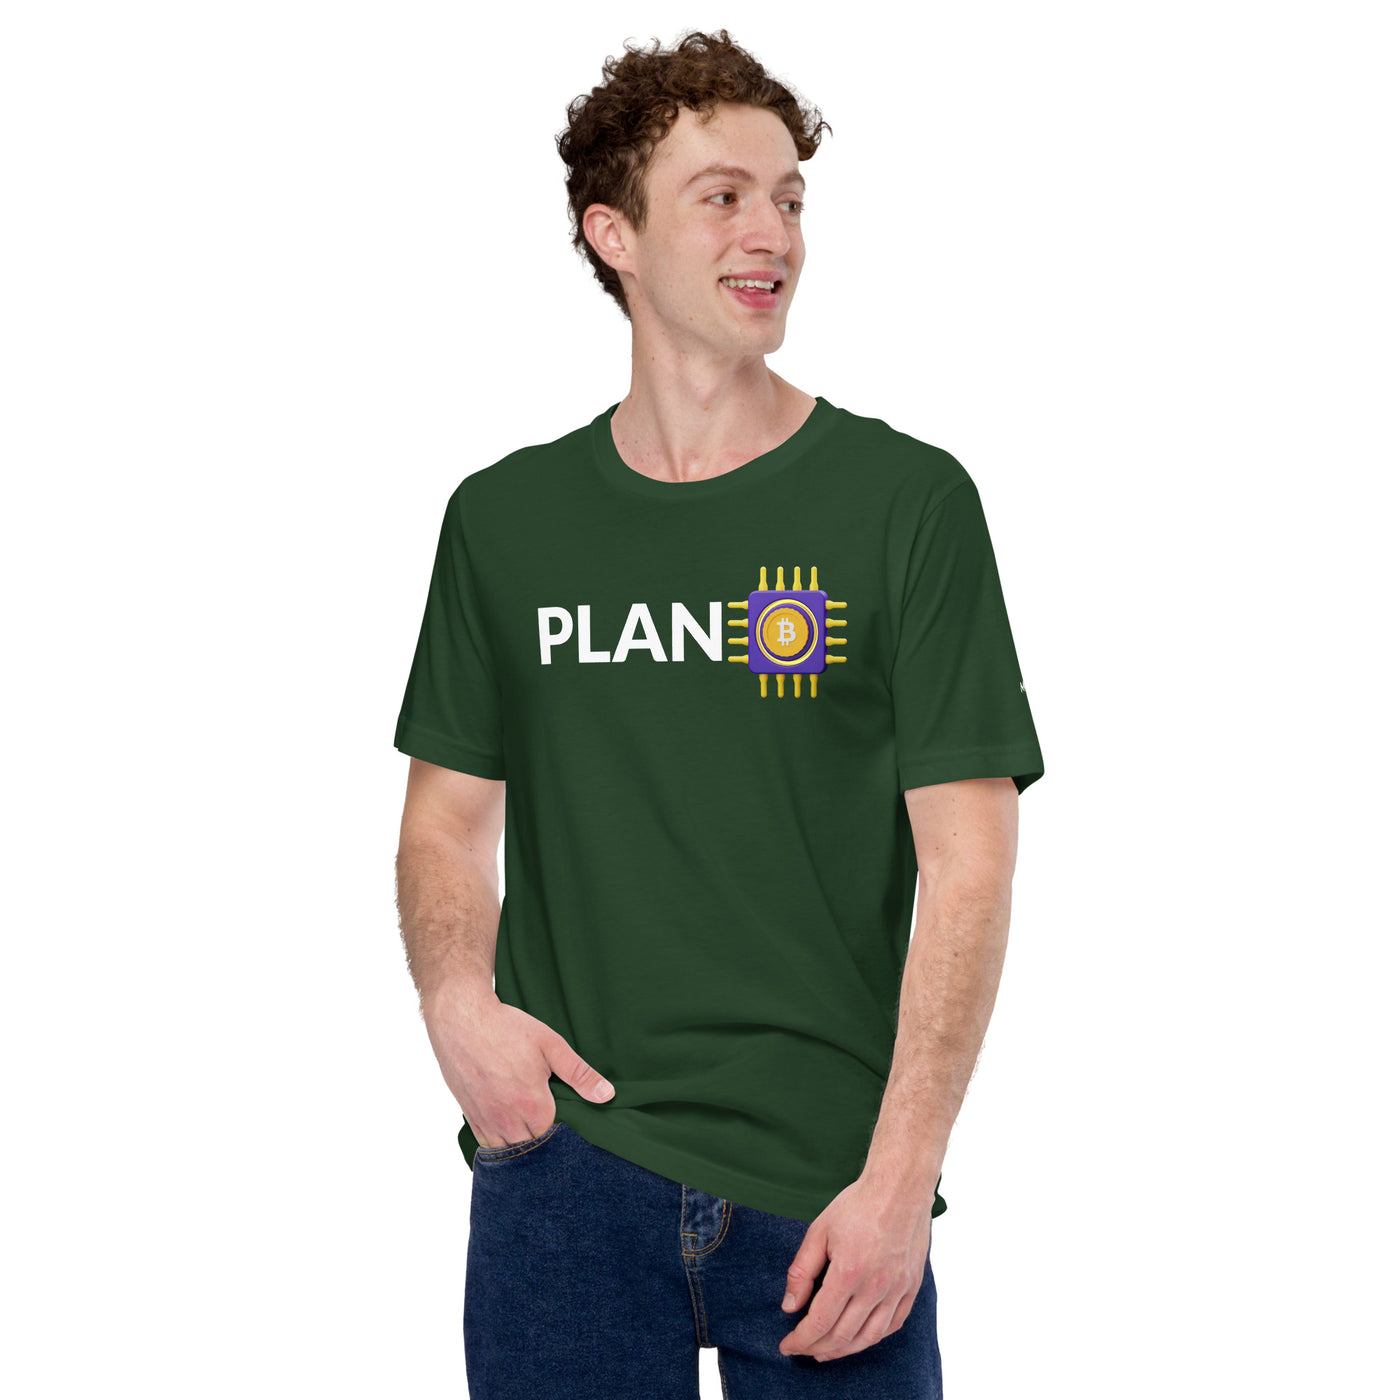 Plan B v3 - Unisex t-shirt